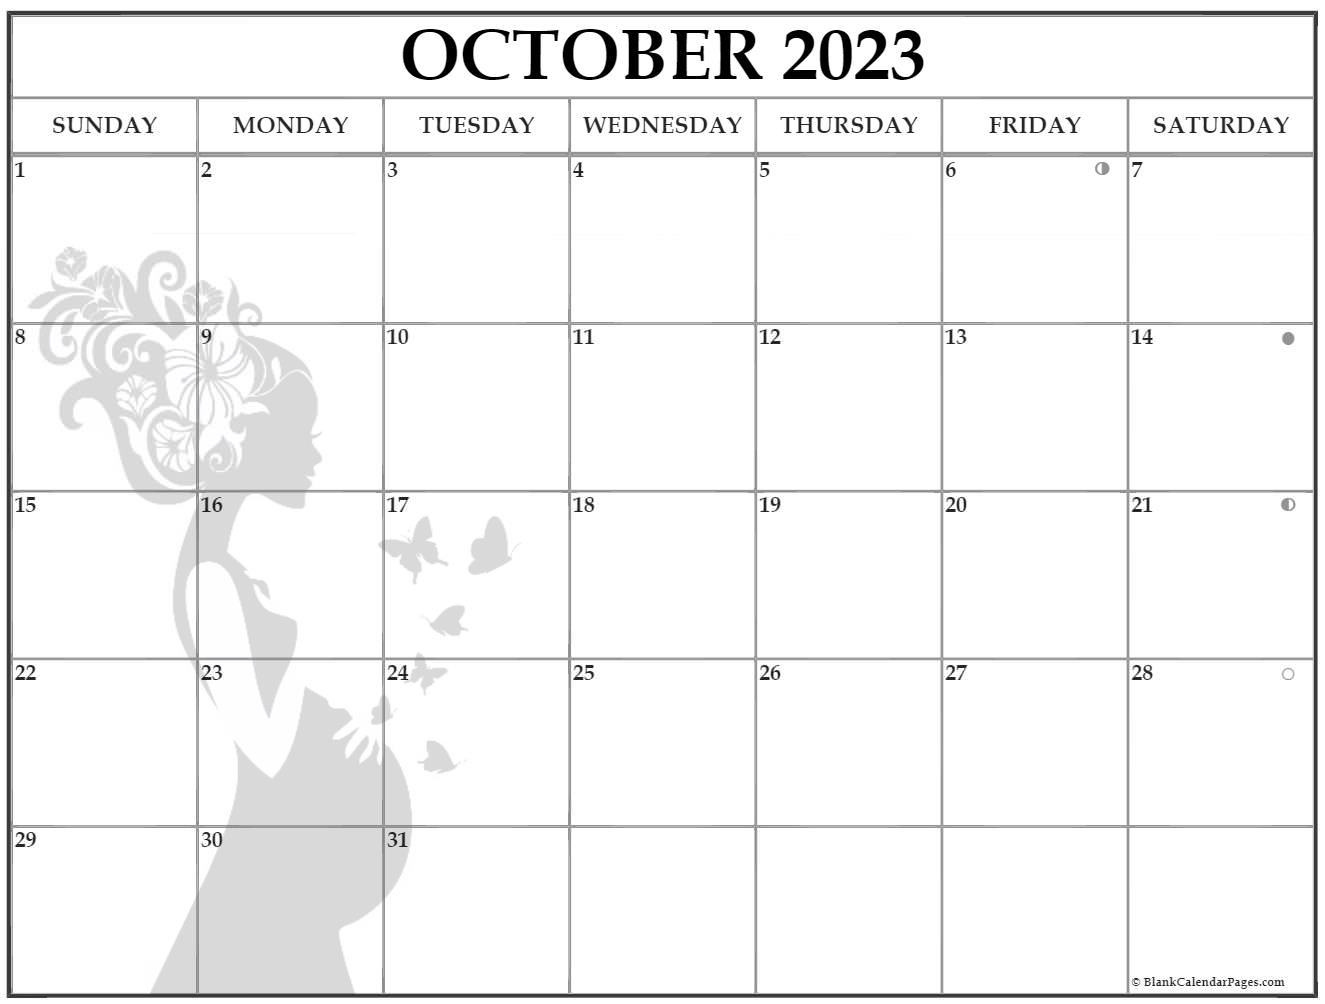 moon-phases-october-2023-2023-calendar